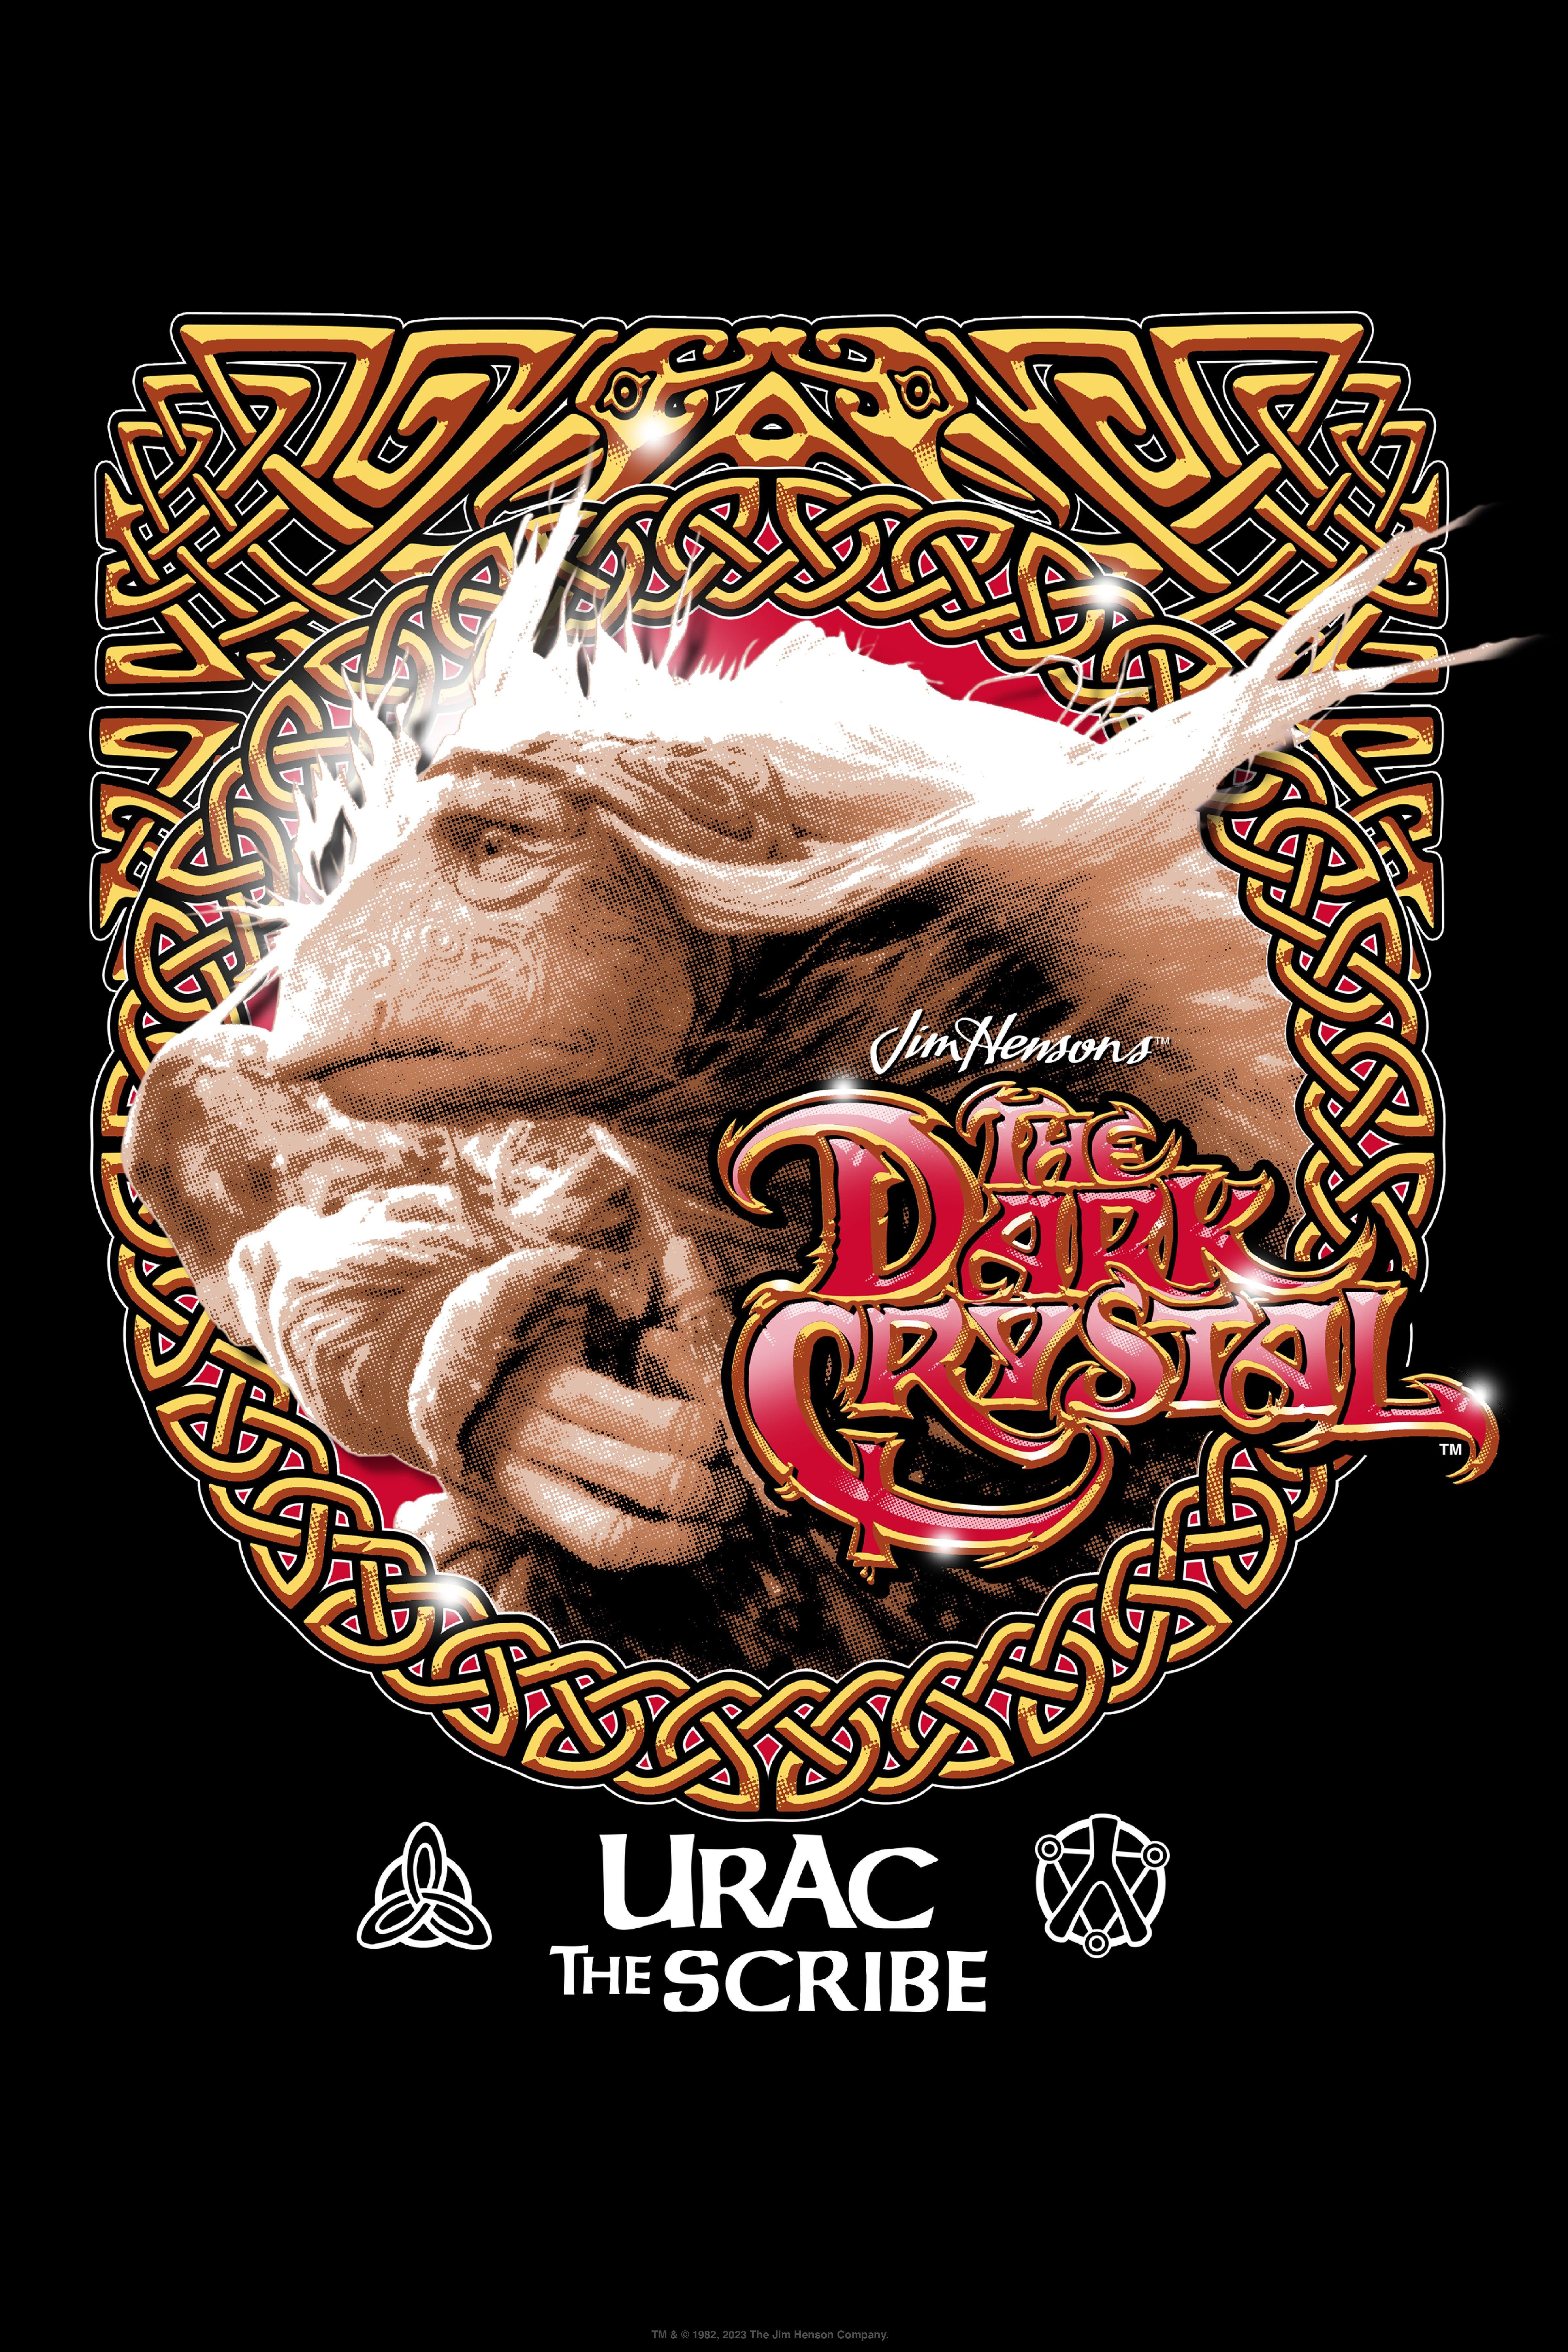 The Dark Crystal UrAc Scribe Poster